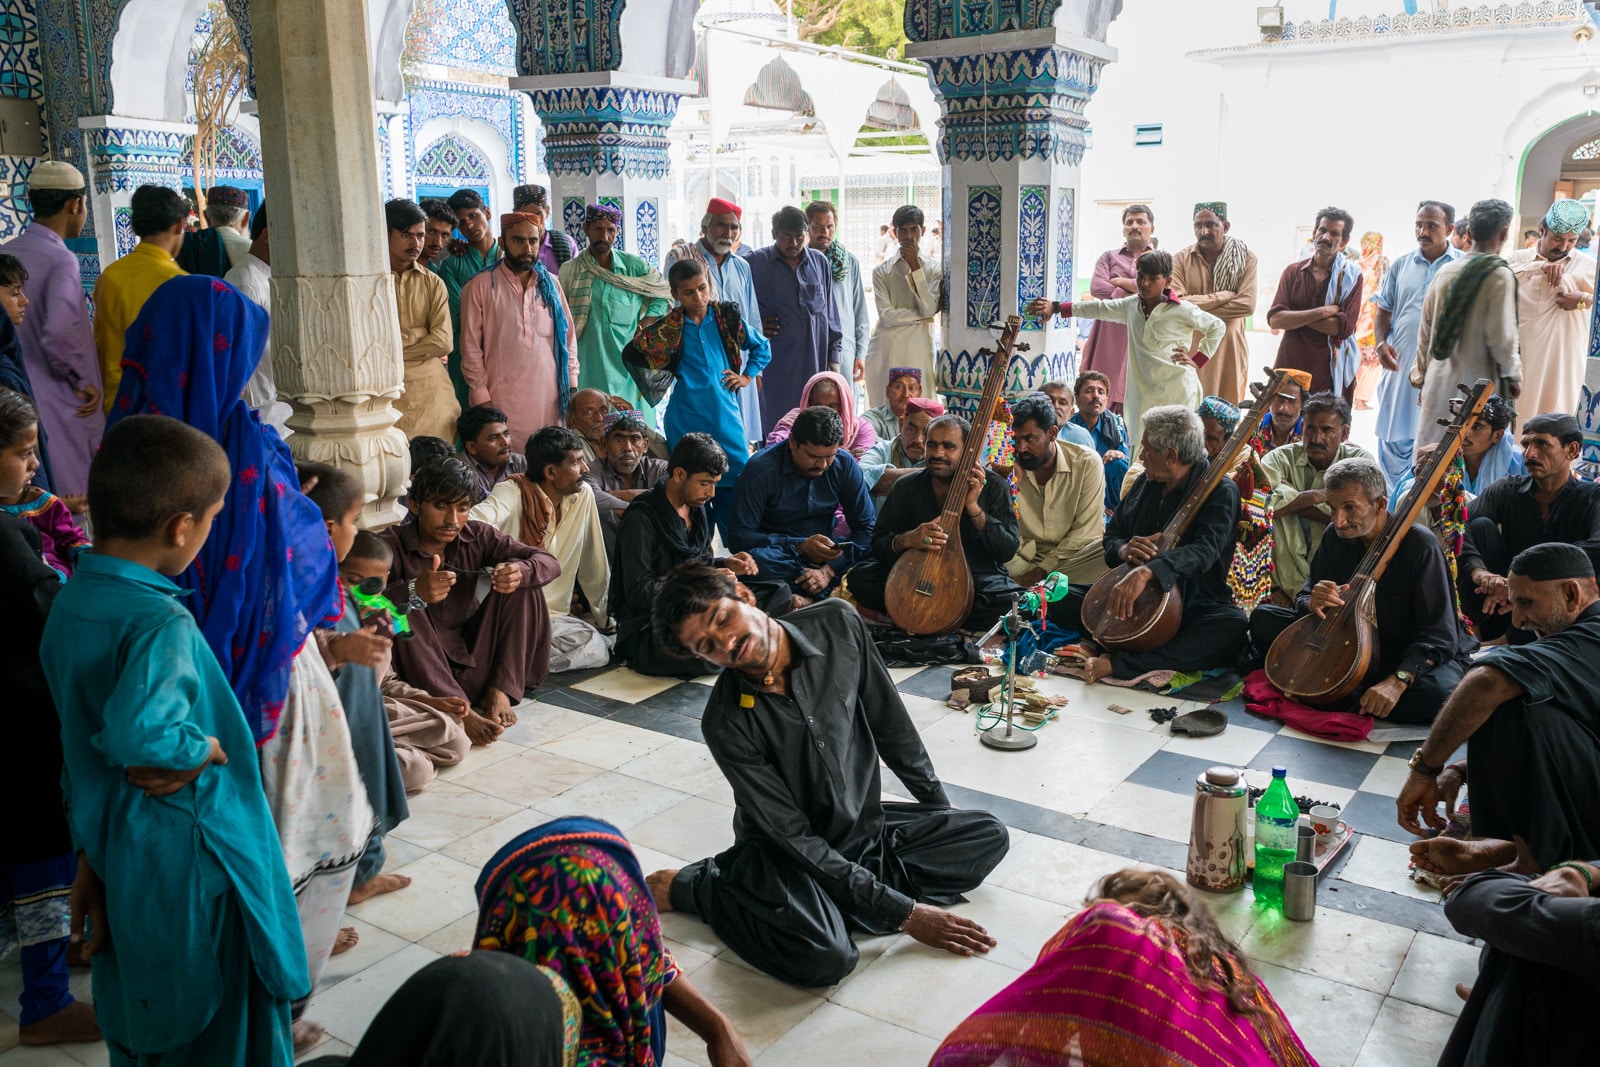 Sindh travel guide - Man in a trance at the shrine of Sufi poet Shah Abdul Latif Bhitai in Bhit Shah, Pakistan - Lost With Purpose travel blog